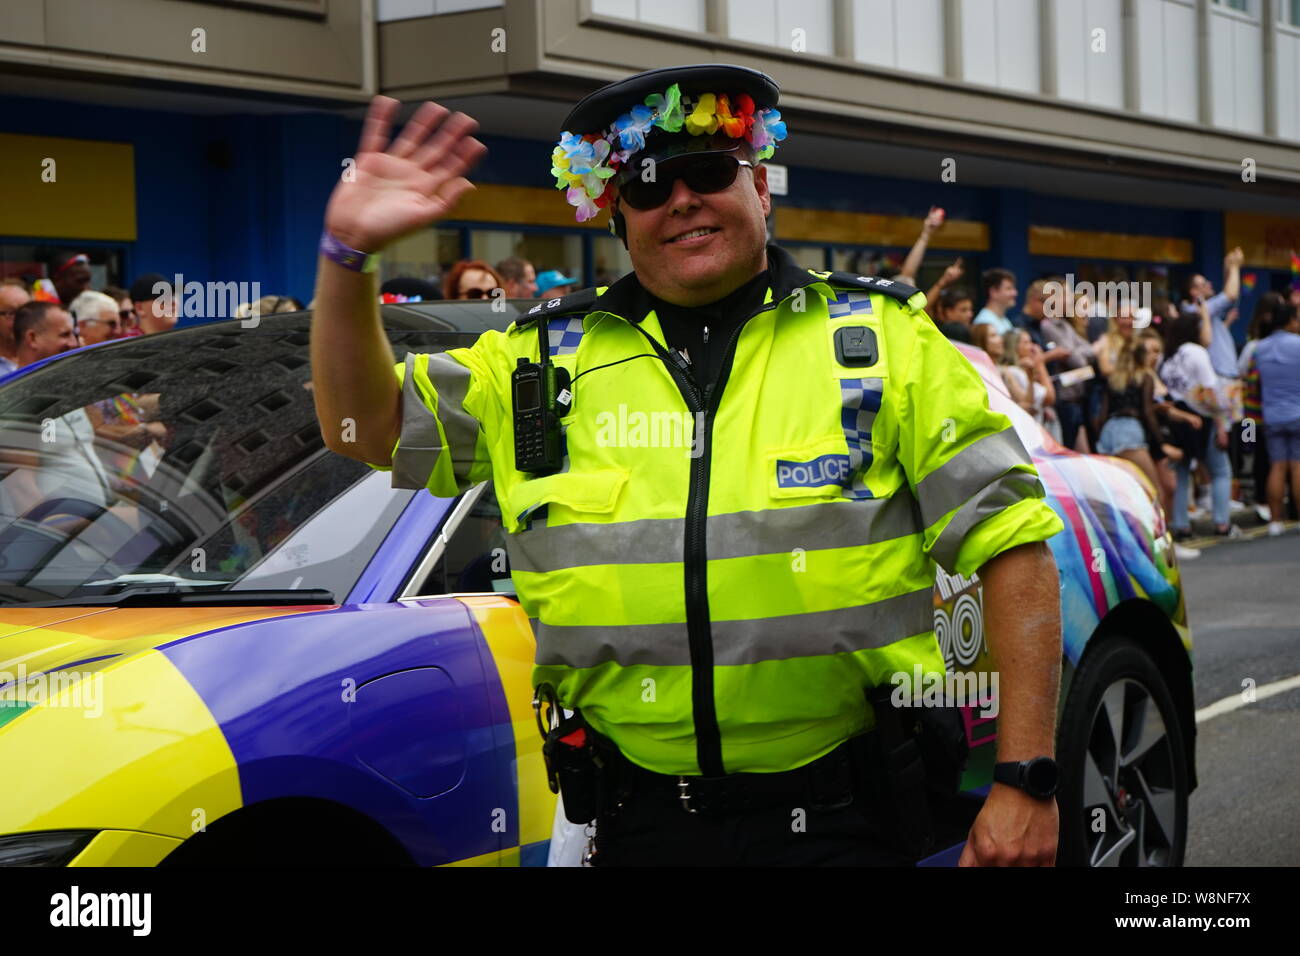 Brighton, UK - 03. August 2019, friendly policeman at brighton and hove pride Stock Photo